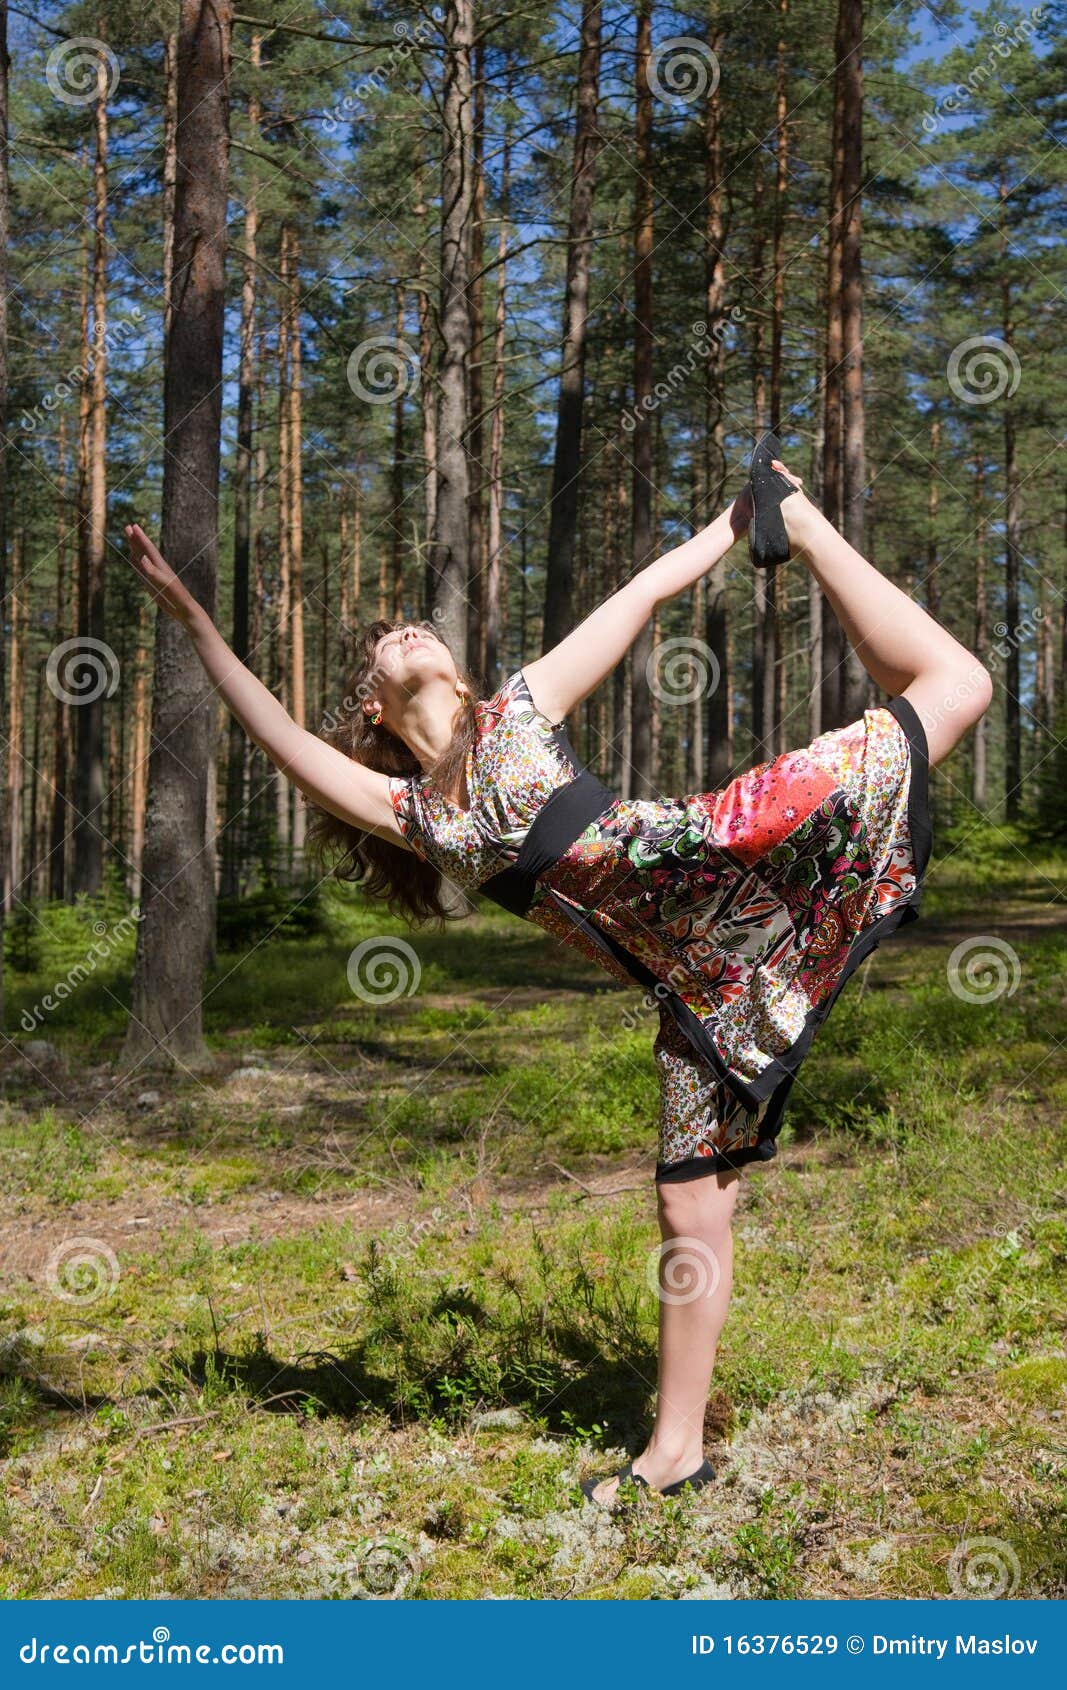 Gymnastics in wood stock image. Image of freedom, summer - 16376529